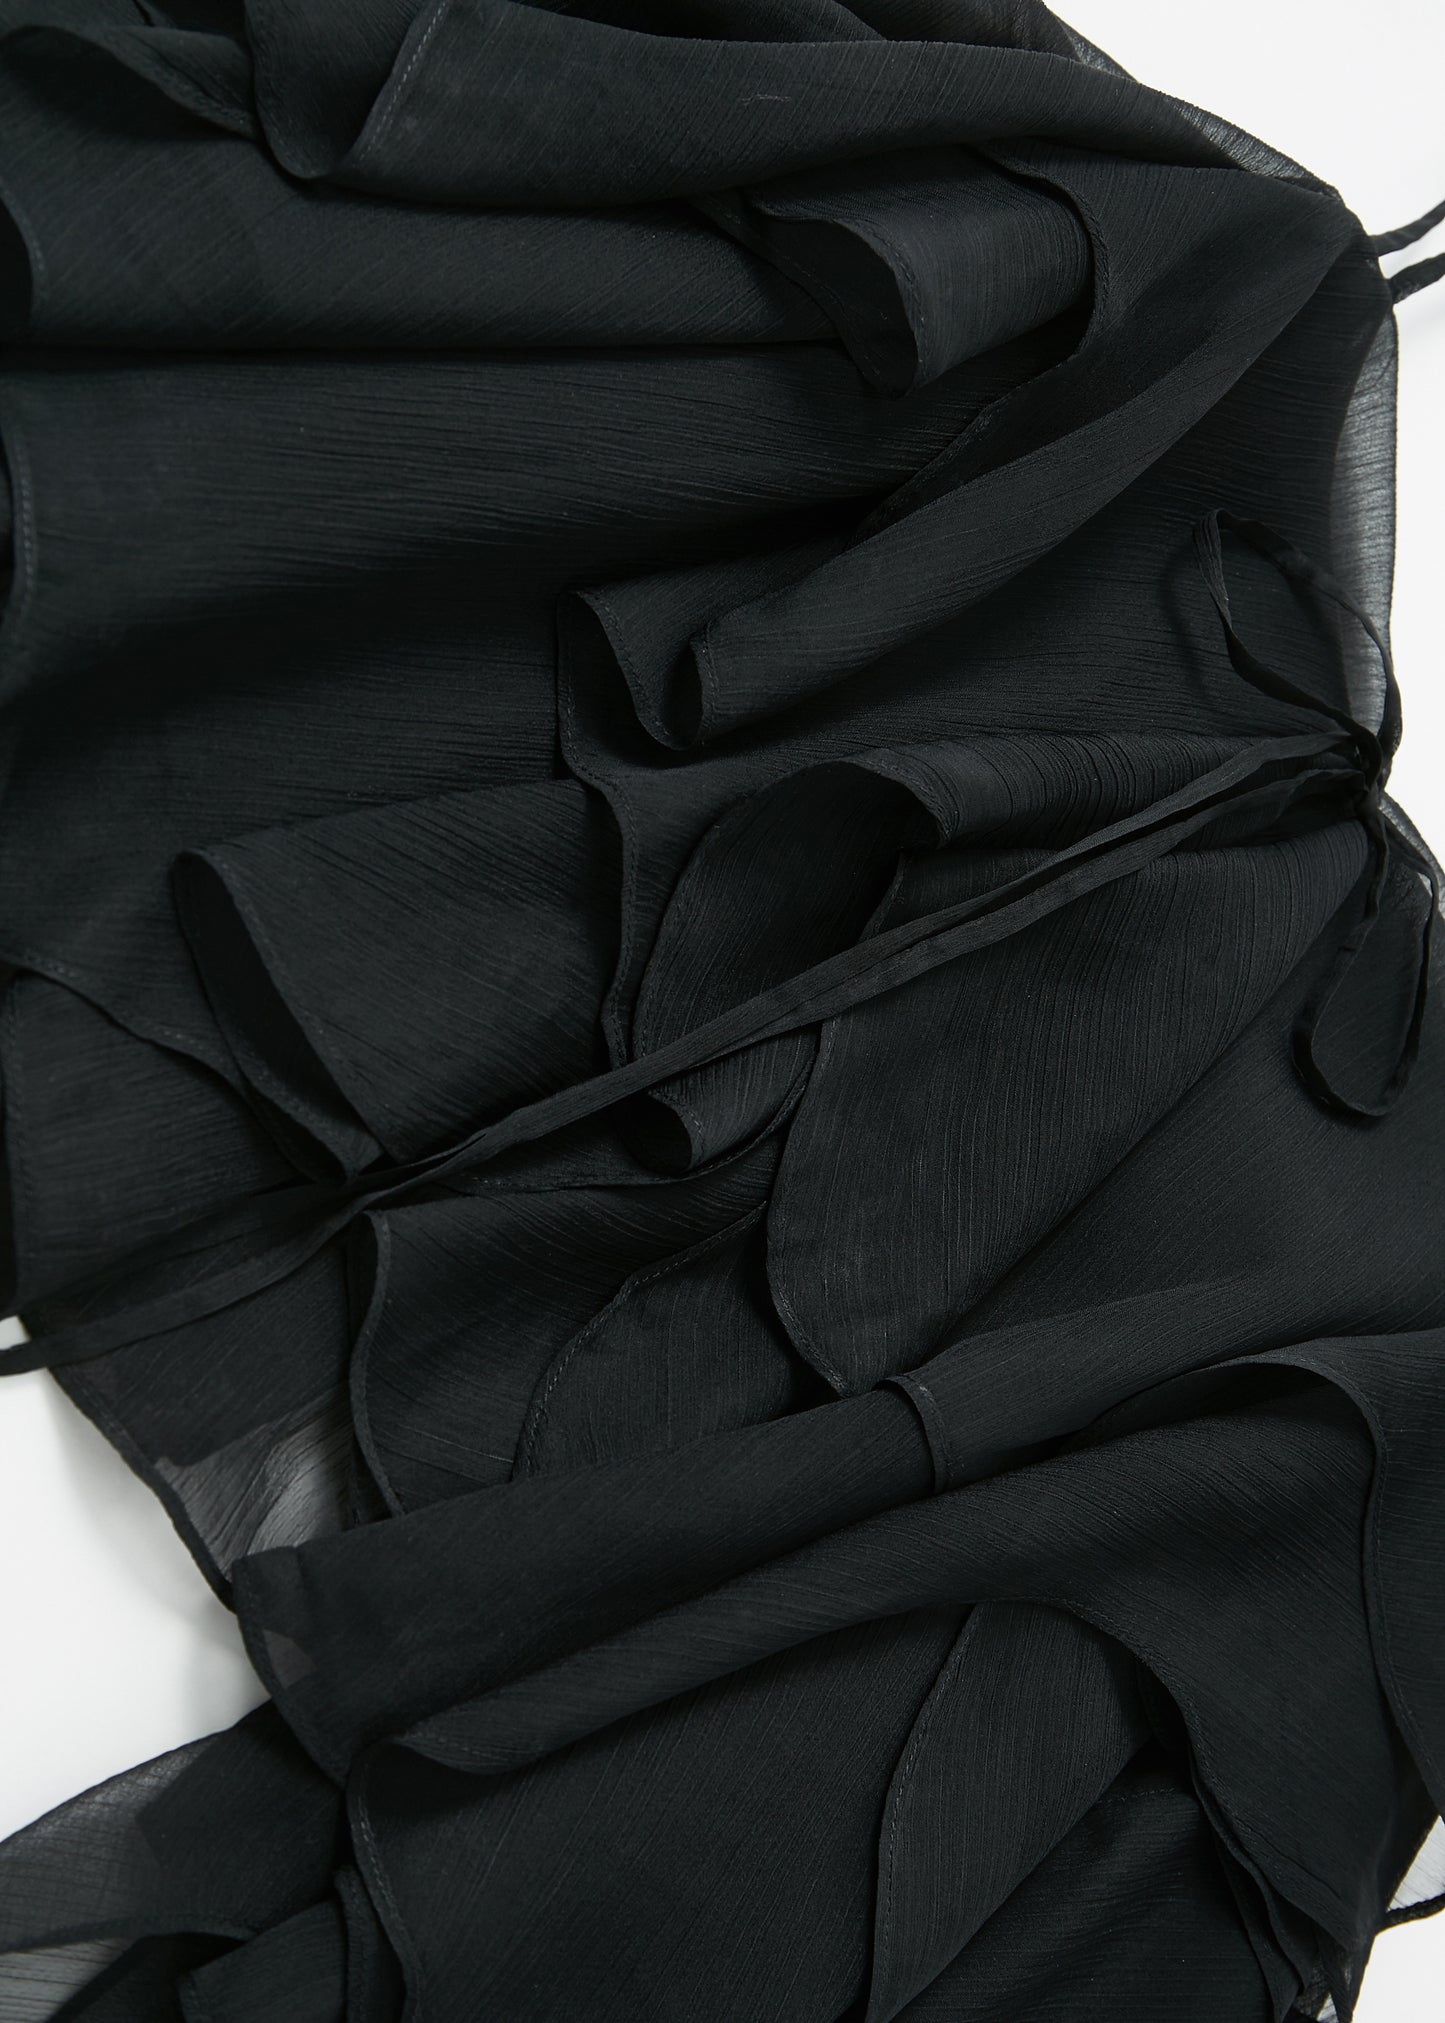 Petal Vest in Black